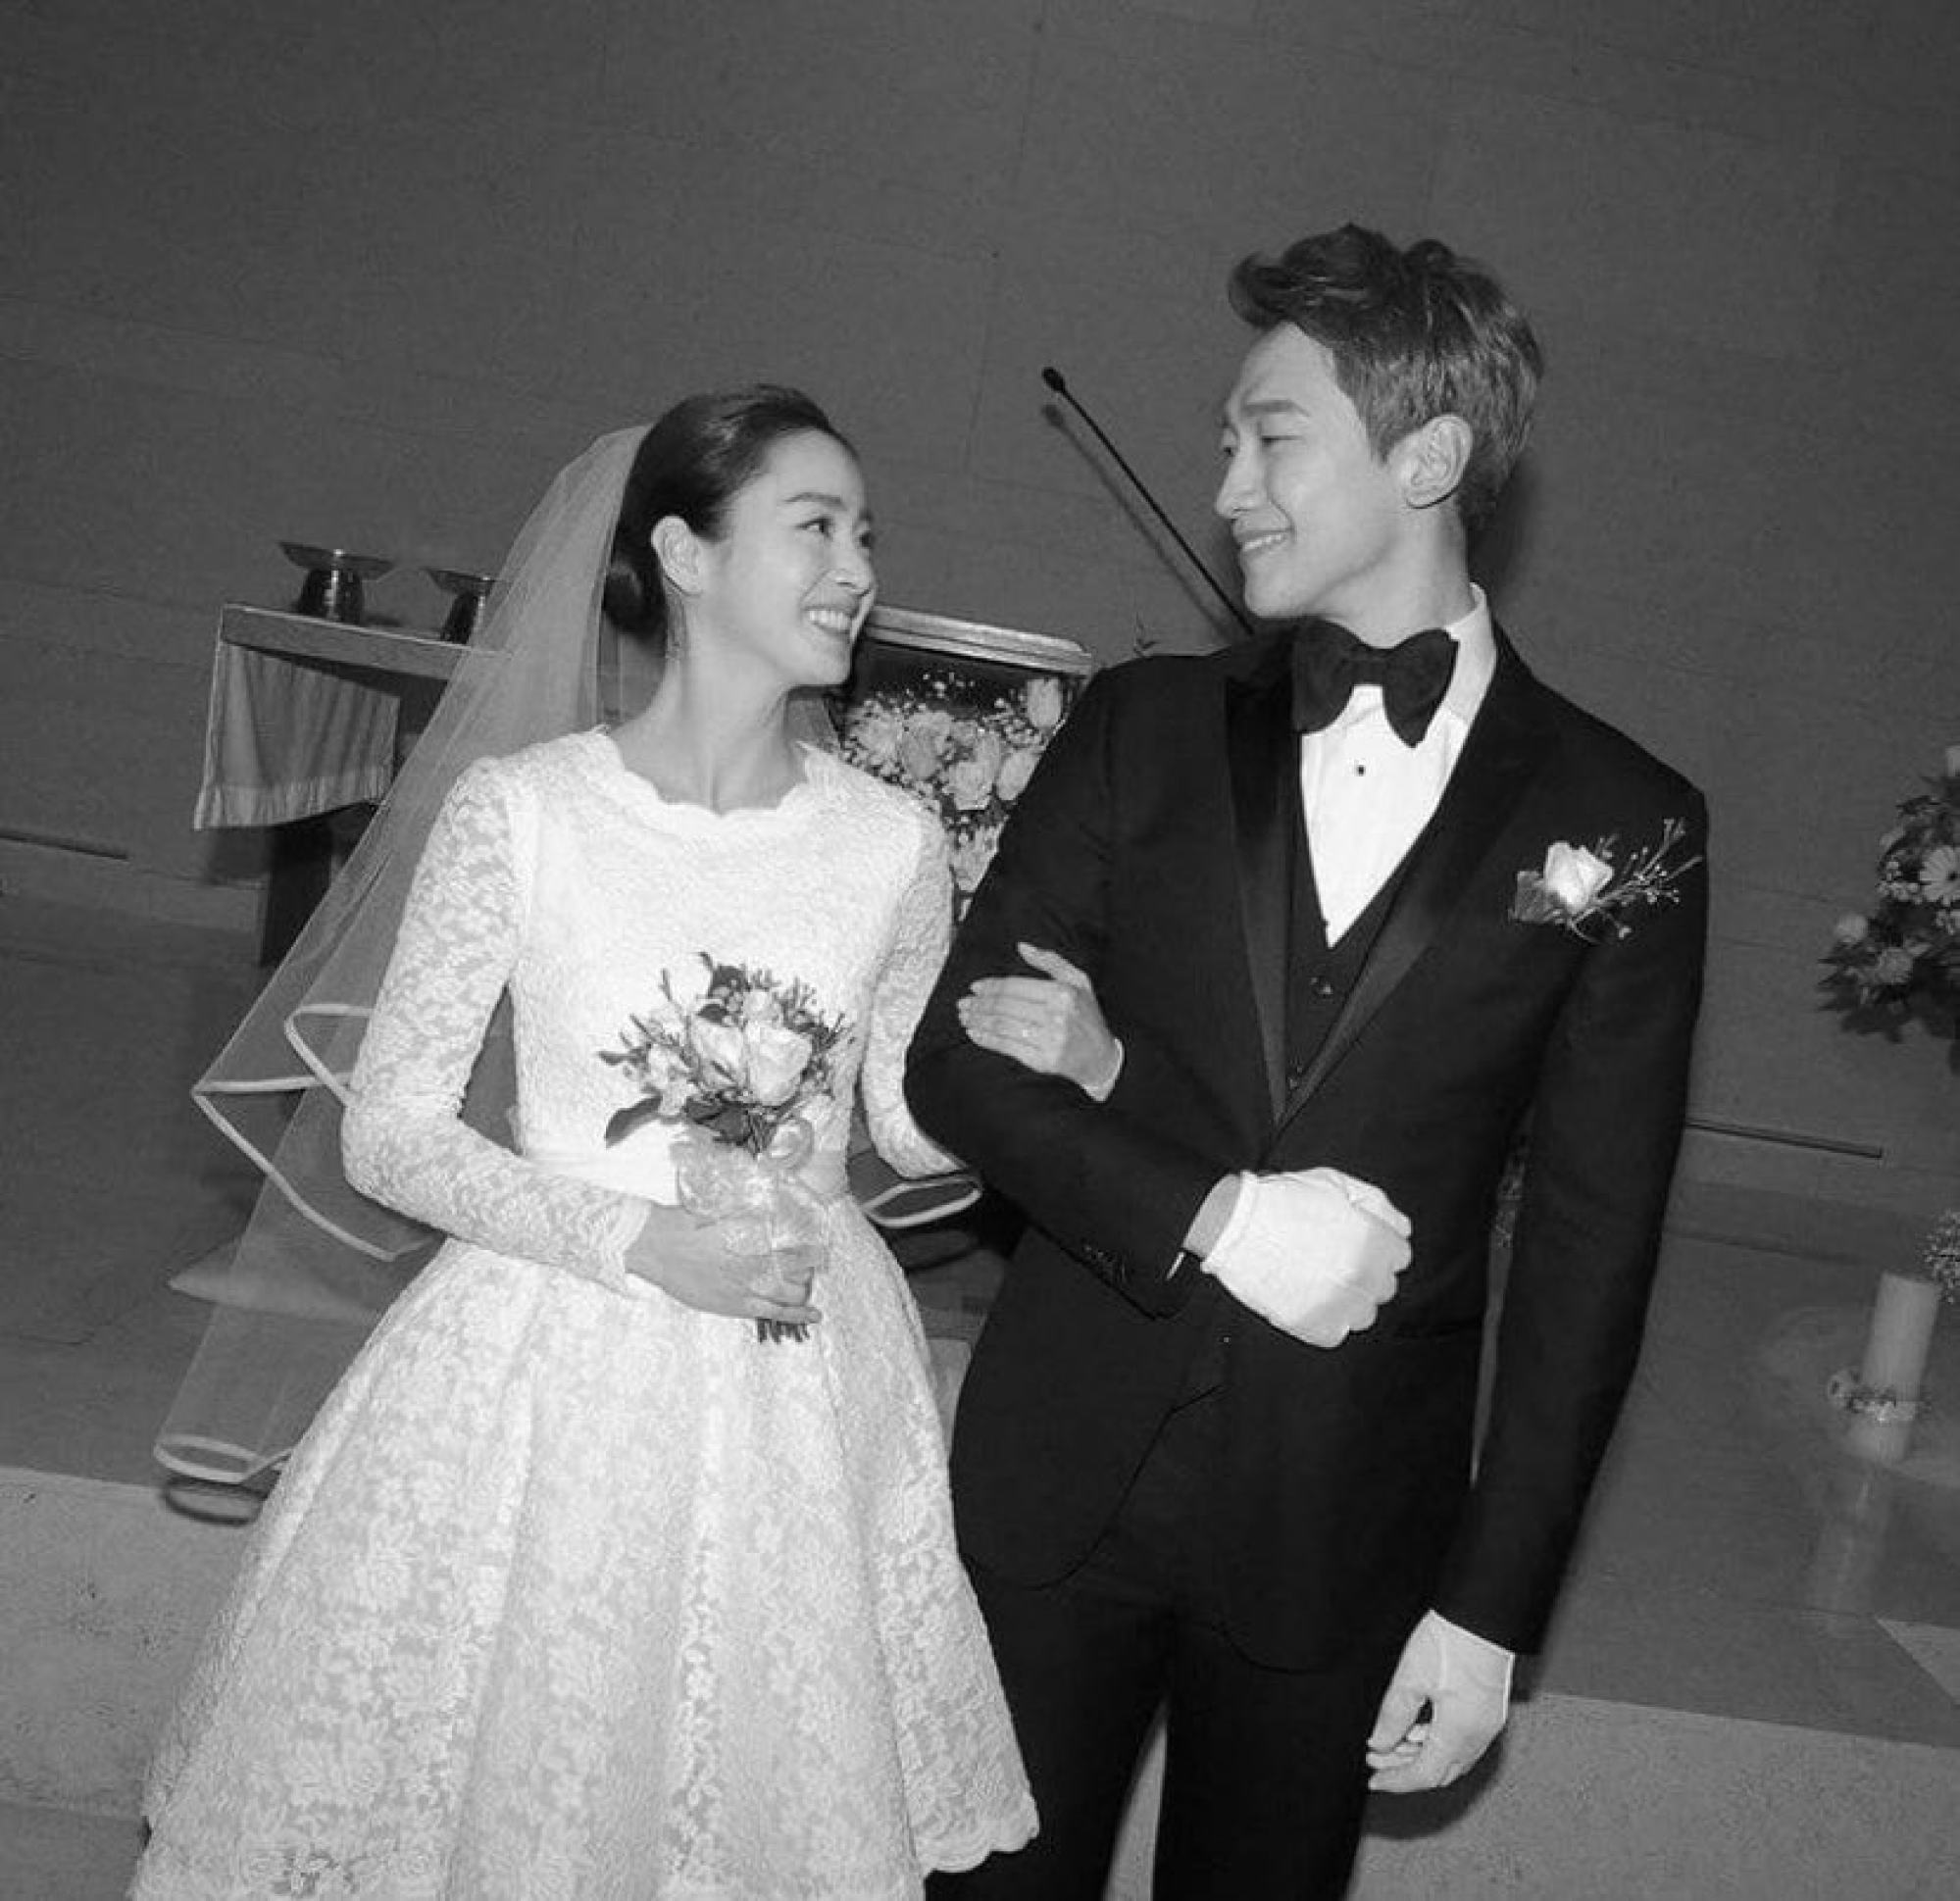 k-drama-stars-most-epic-wedding-dresses-song-hye-kyo-looked-stunning